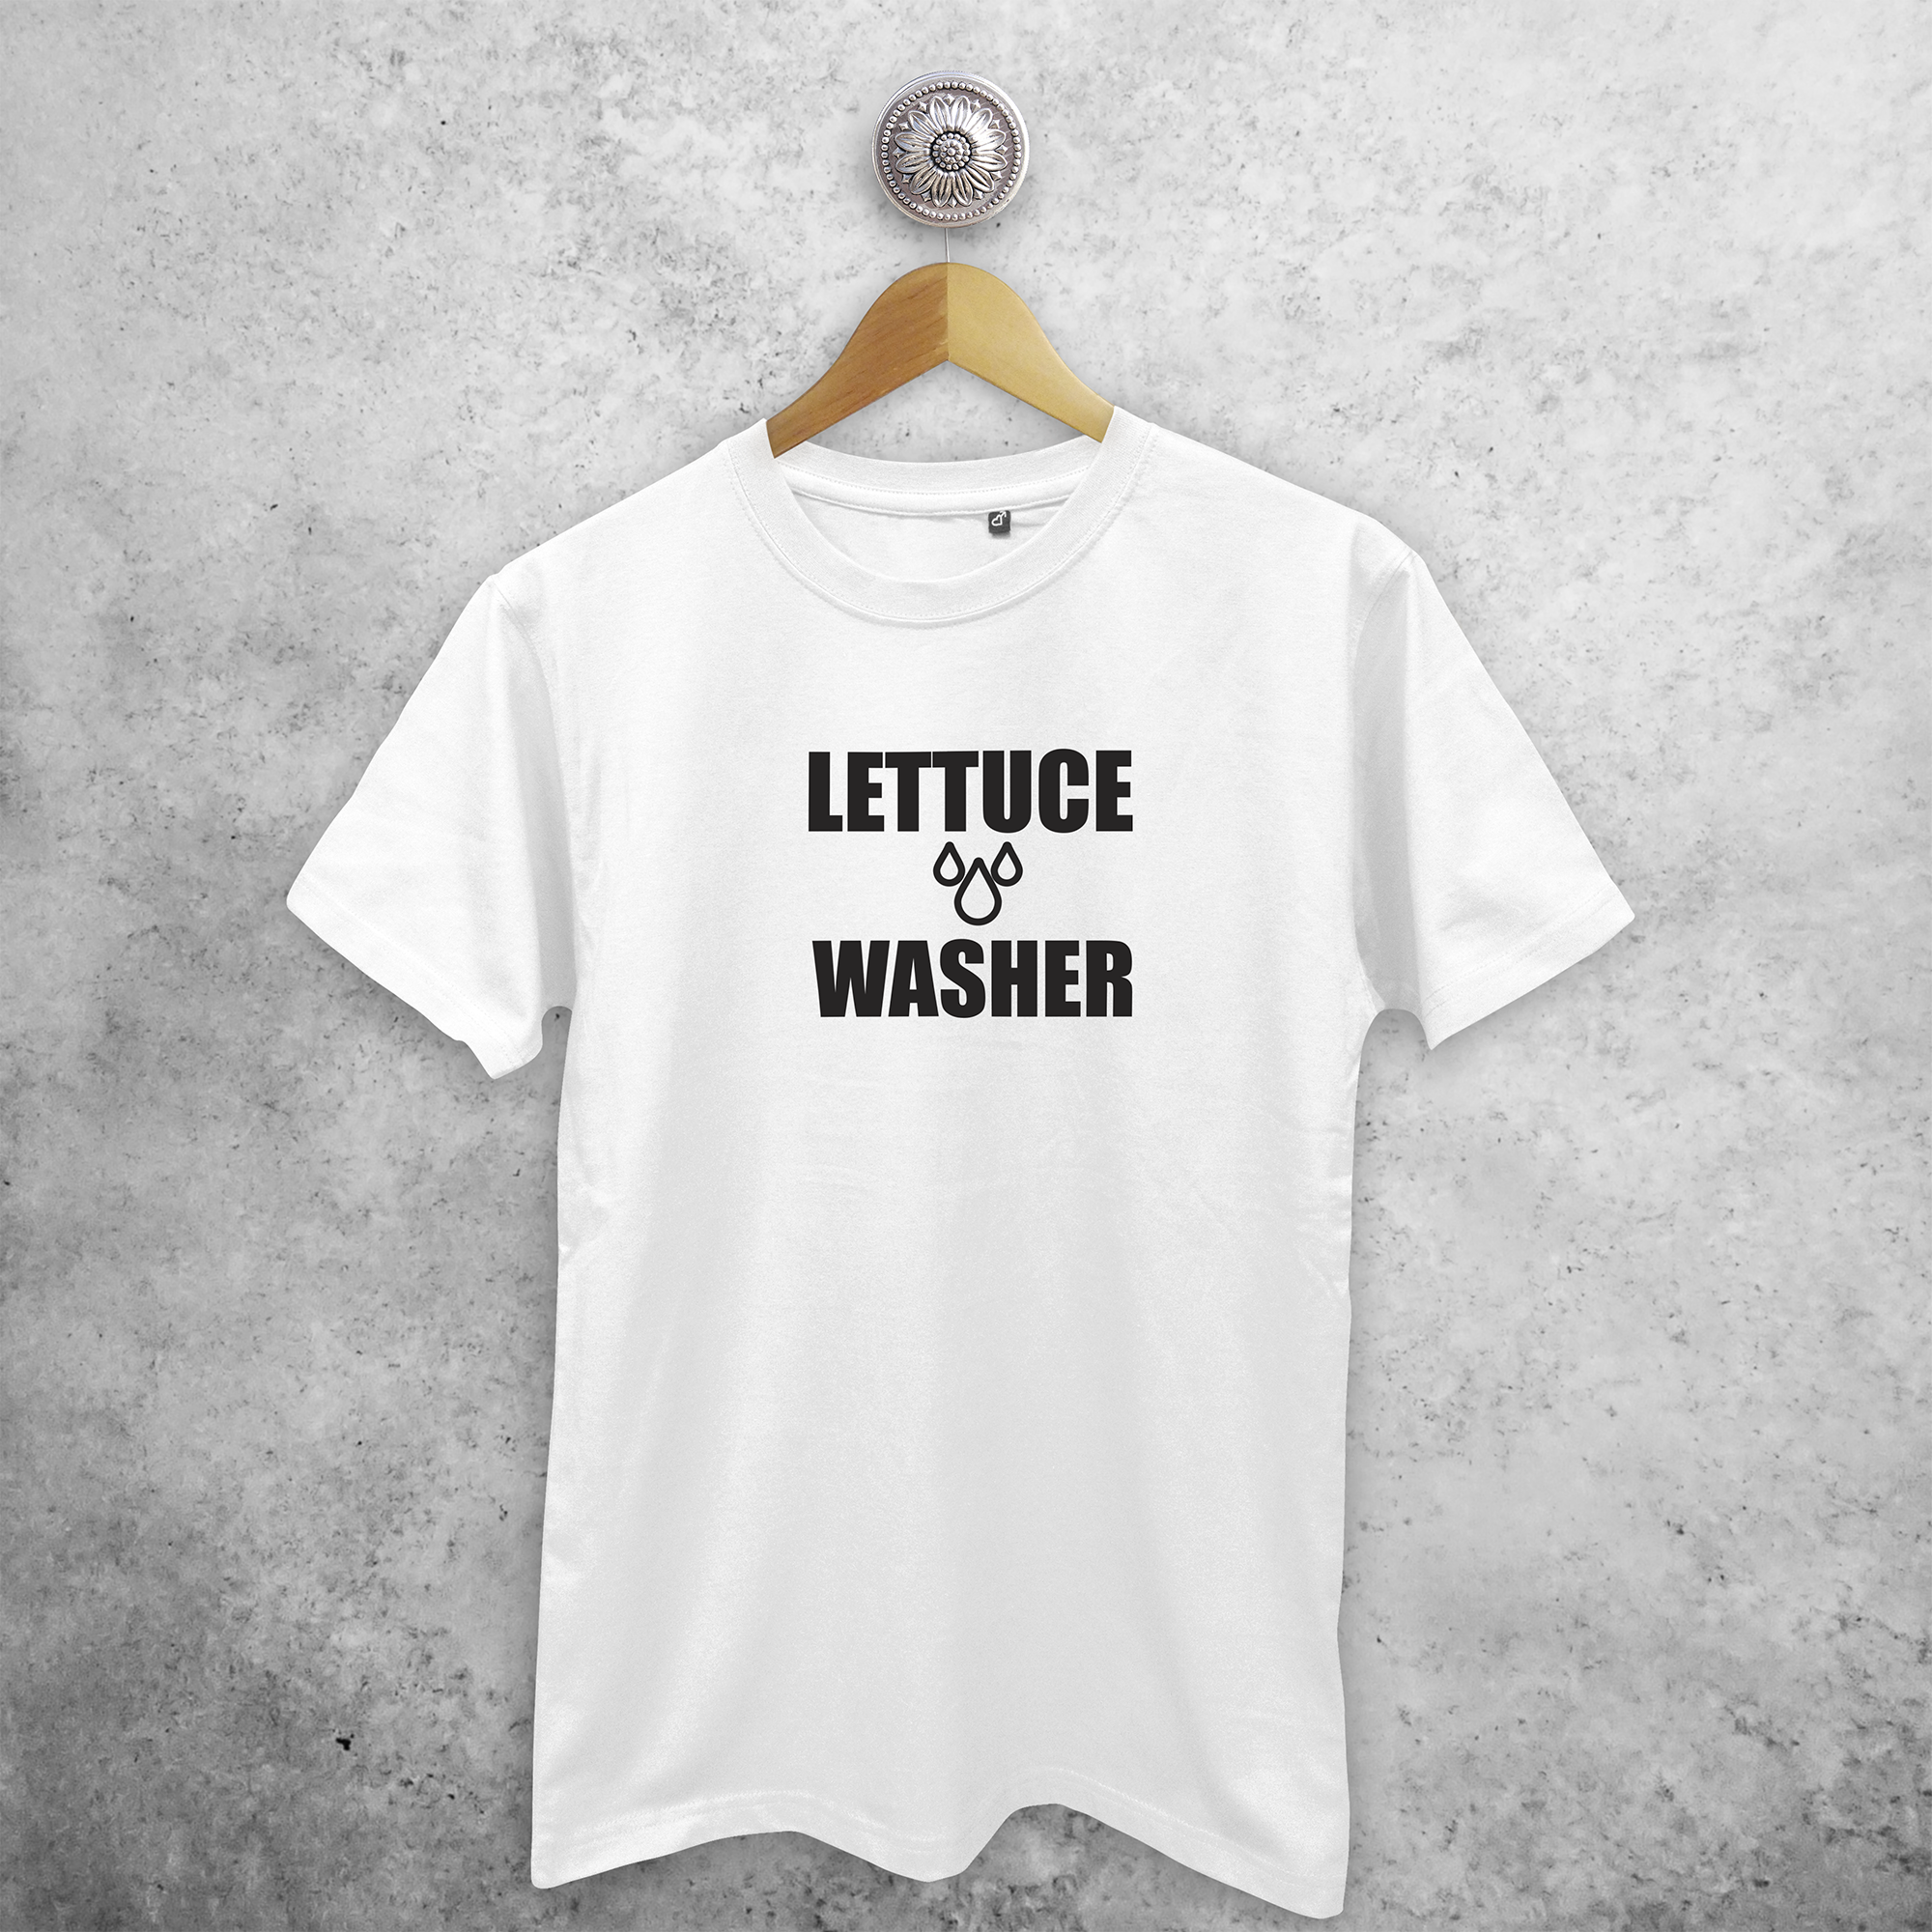 'Lettuce washer' adult shirt